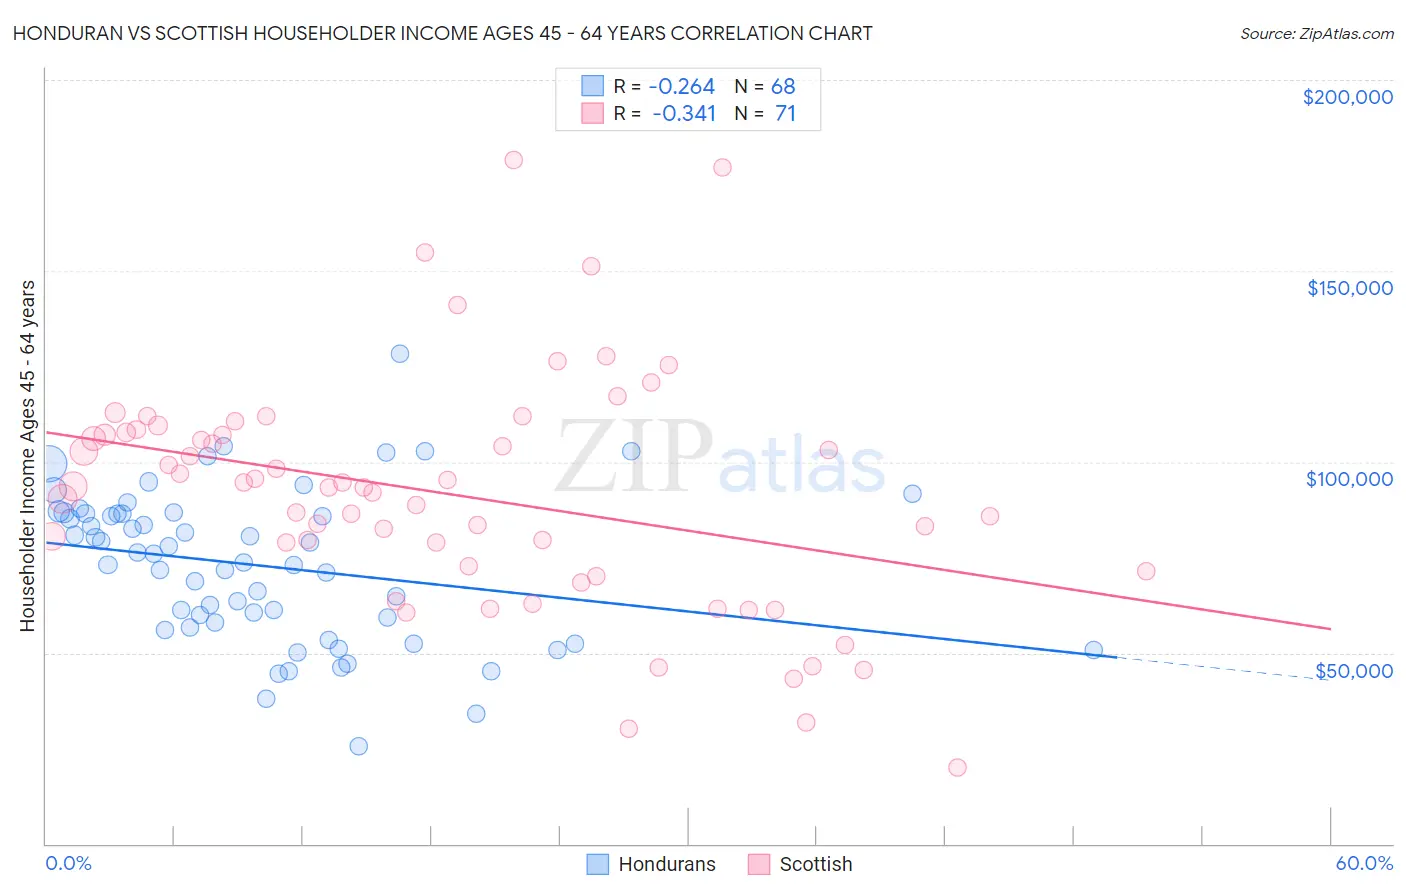 Honduran vs Scottish Householder Income Ages 45 - 64 years